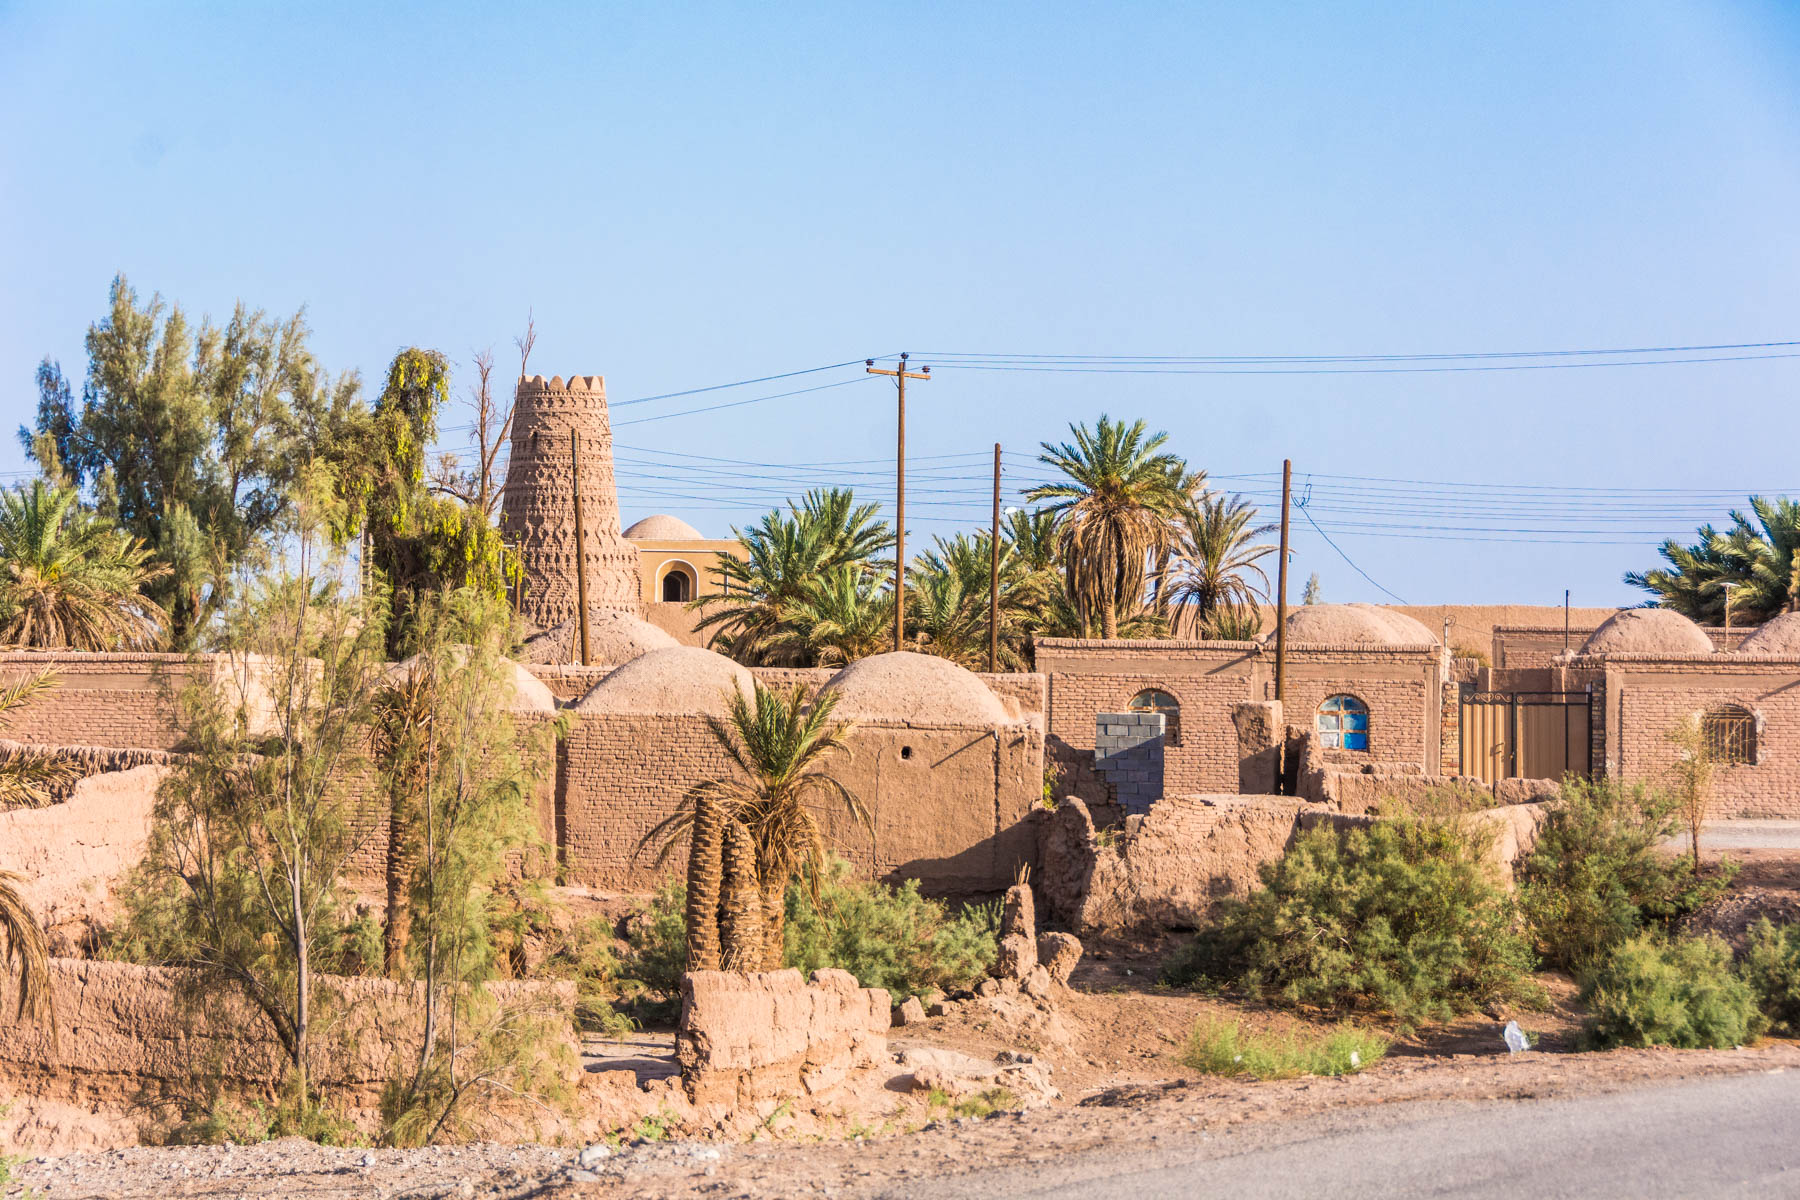 Two week Iran travel itinerary - Shahdad desert town near Kerman, Iran - Lost With Purpose